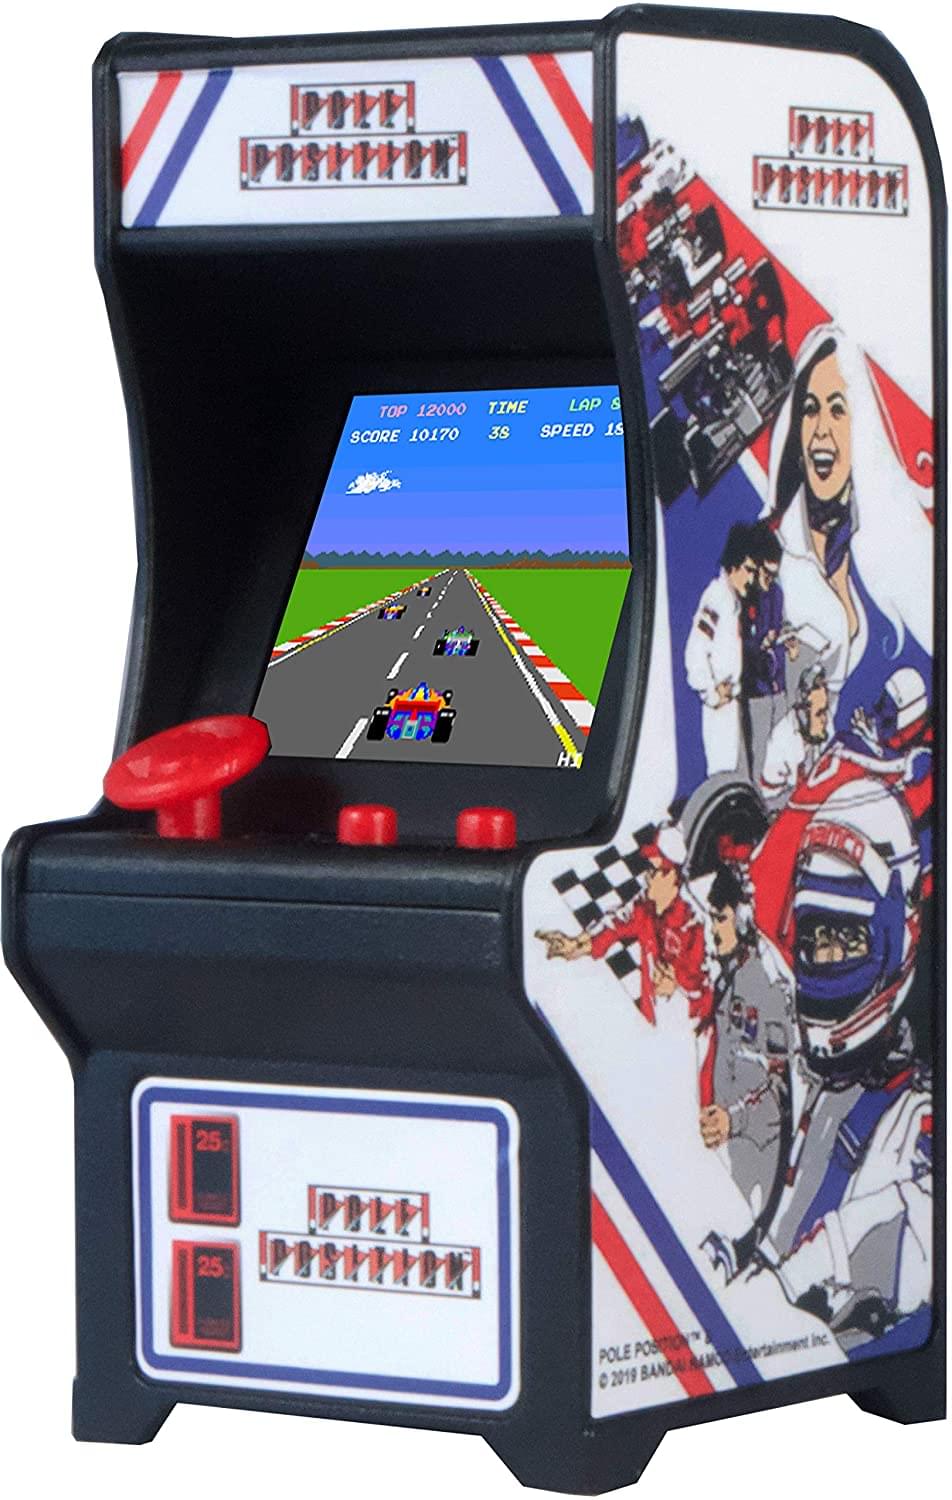 Tiny Arcade Miniature Video Game | Pole Position